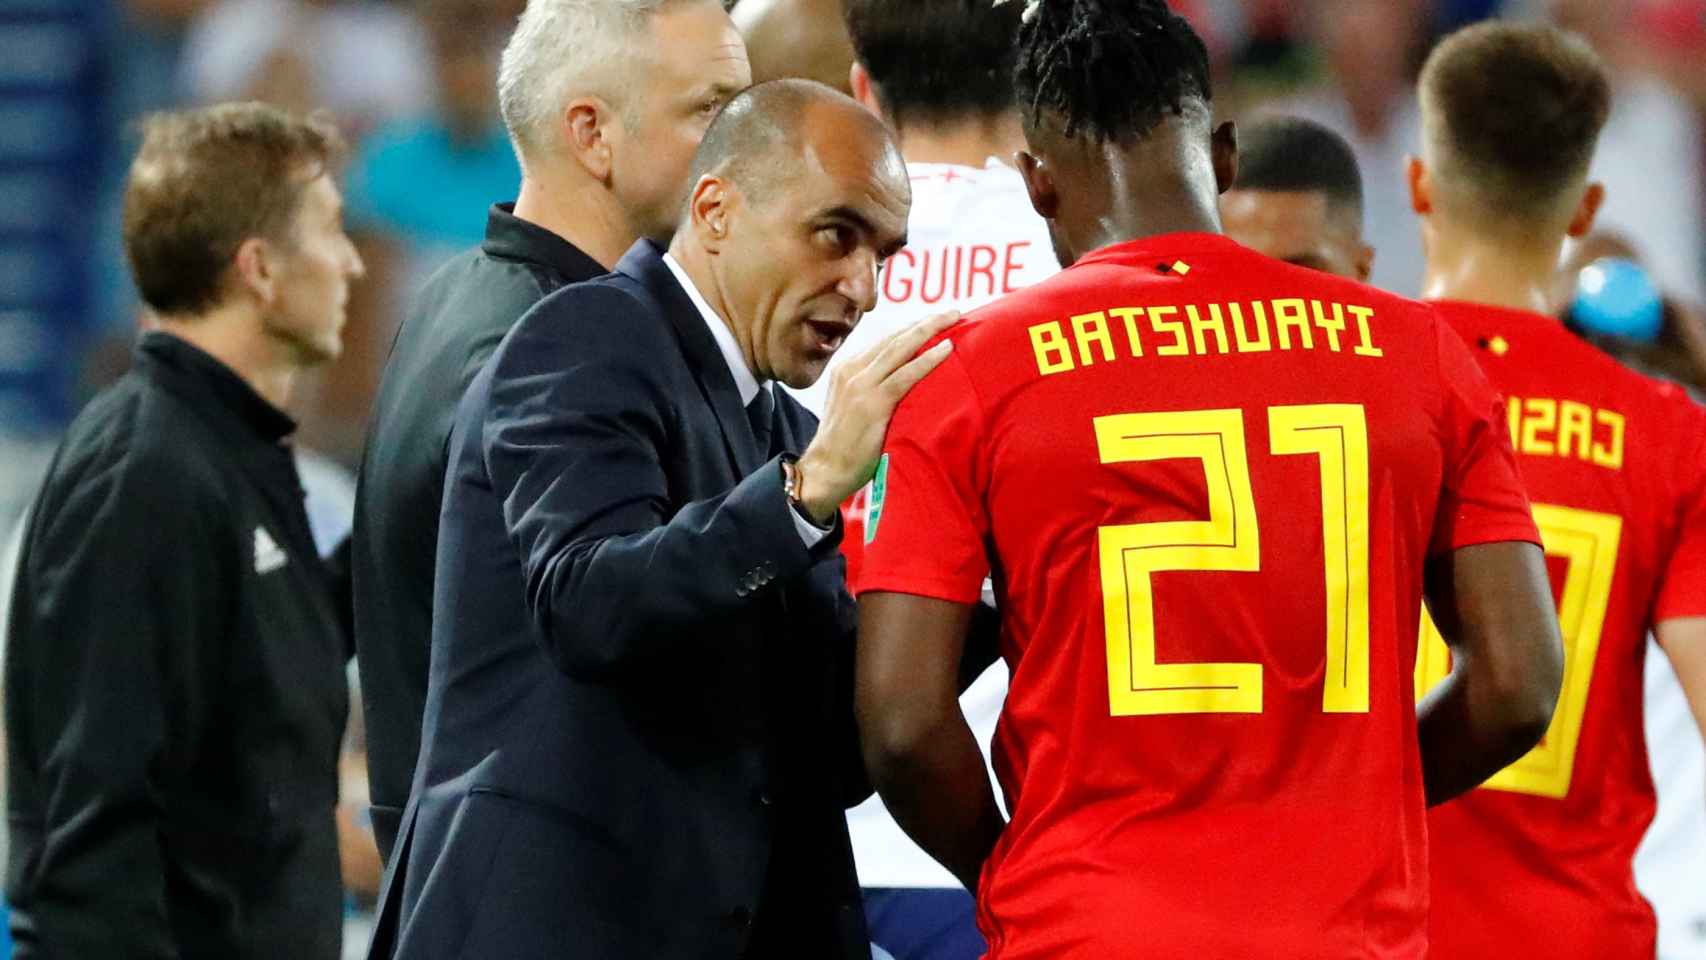 Batshuayi conversa con Roberto Martínez, seleccionador de Bélgica.